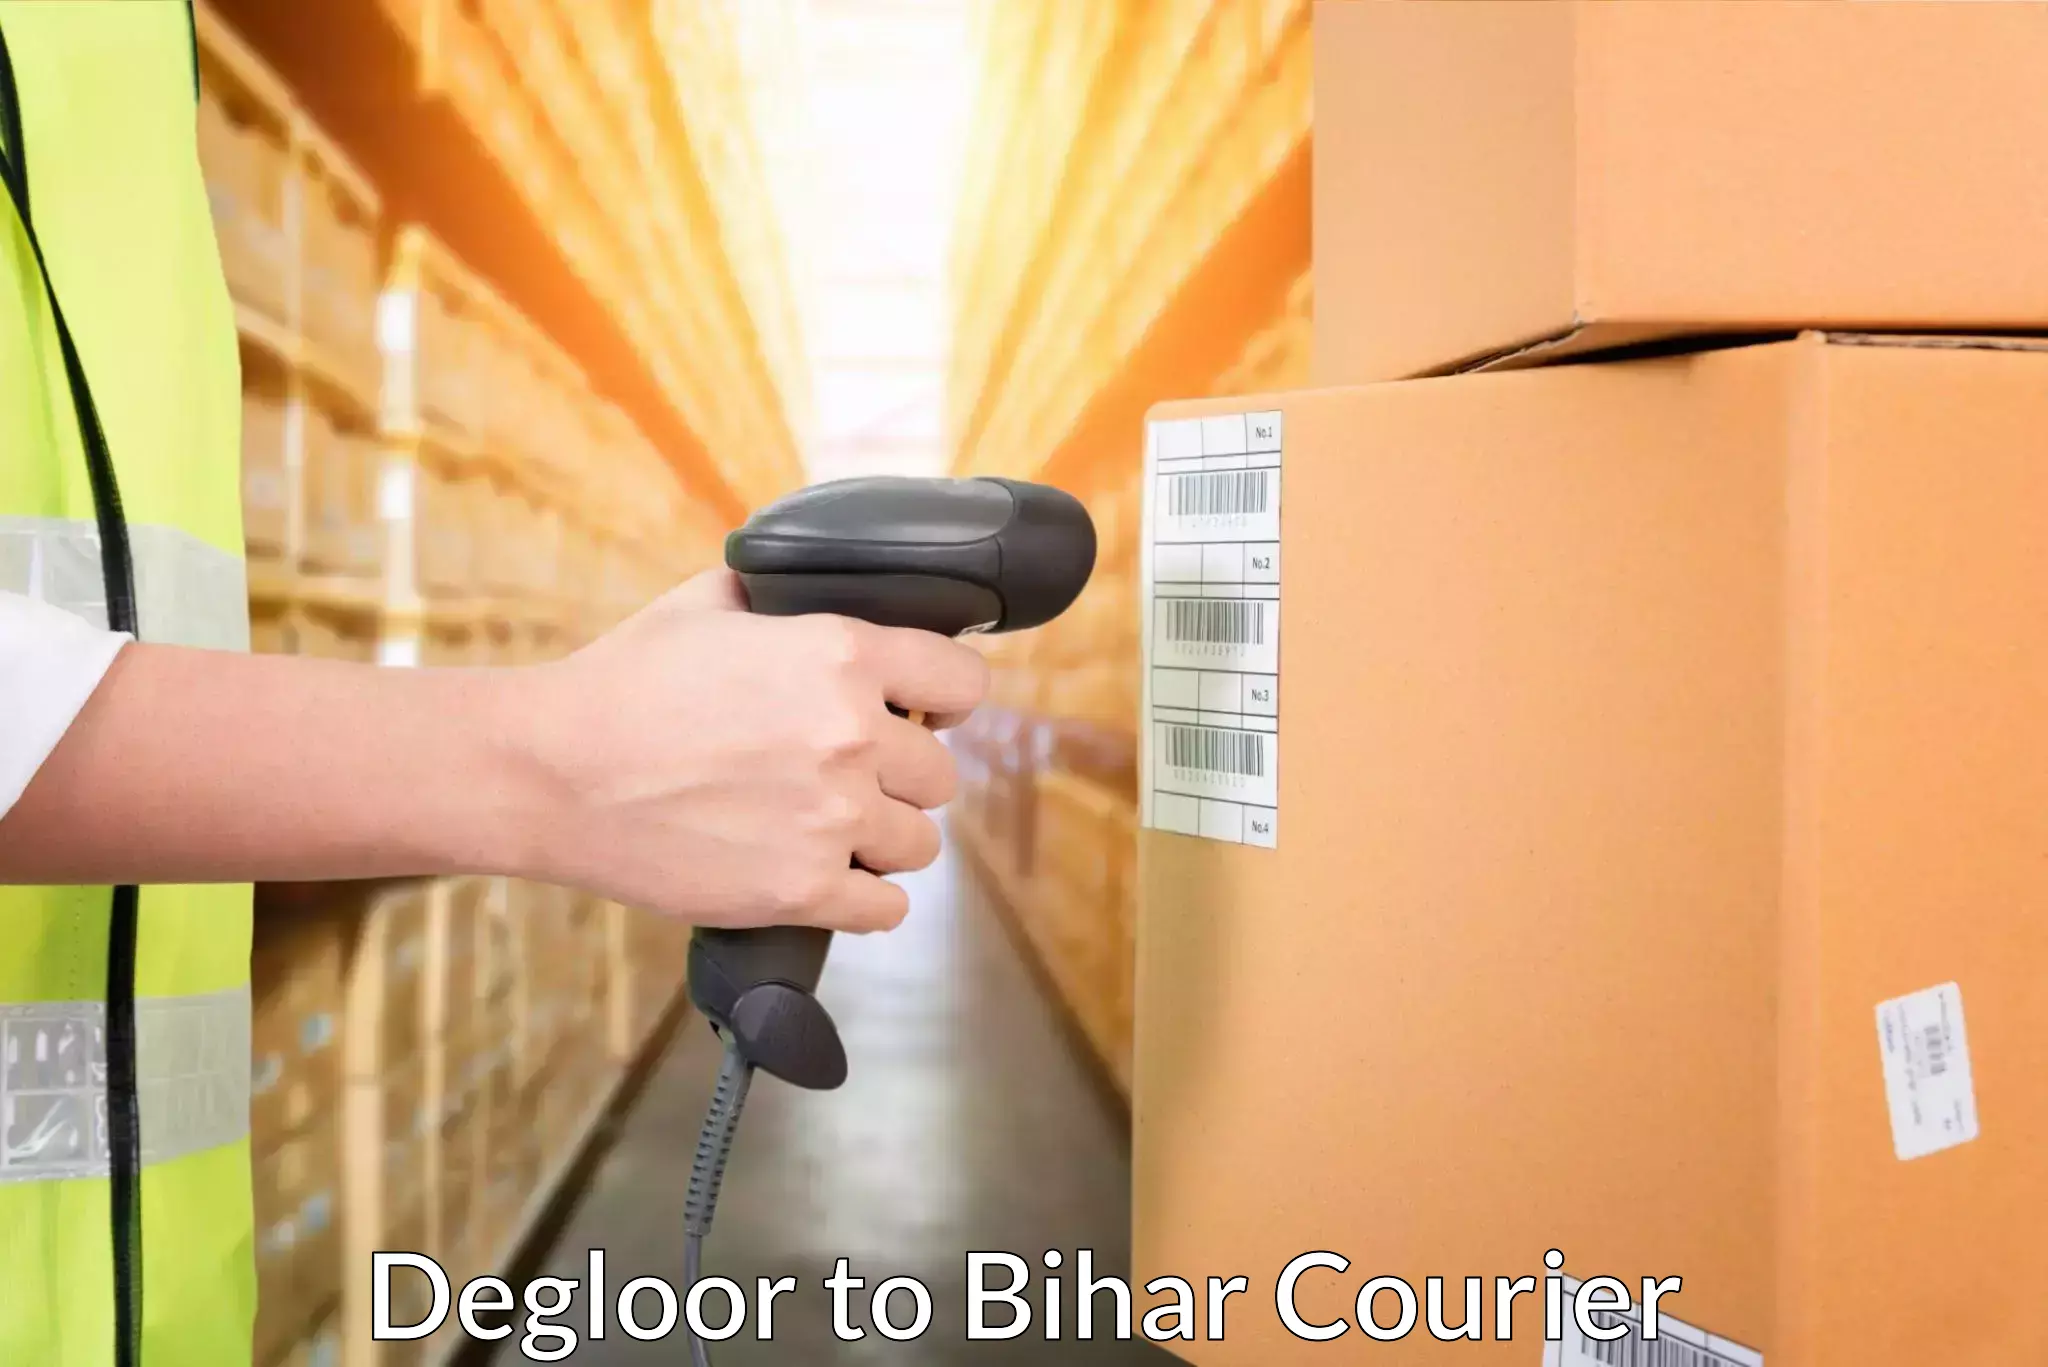 Speedy delivery service Degloor to Bihar